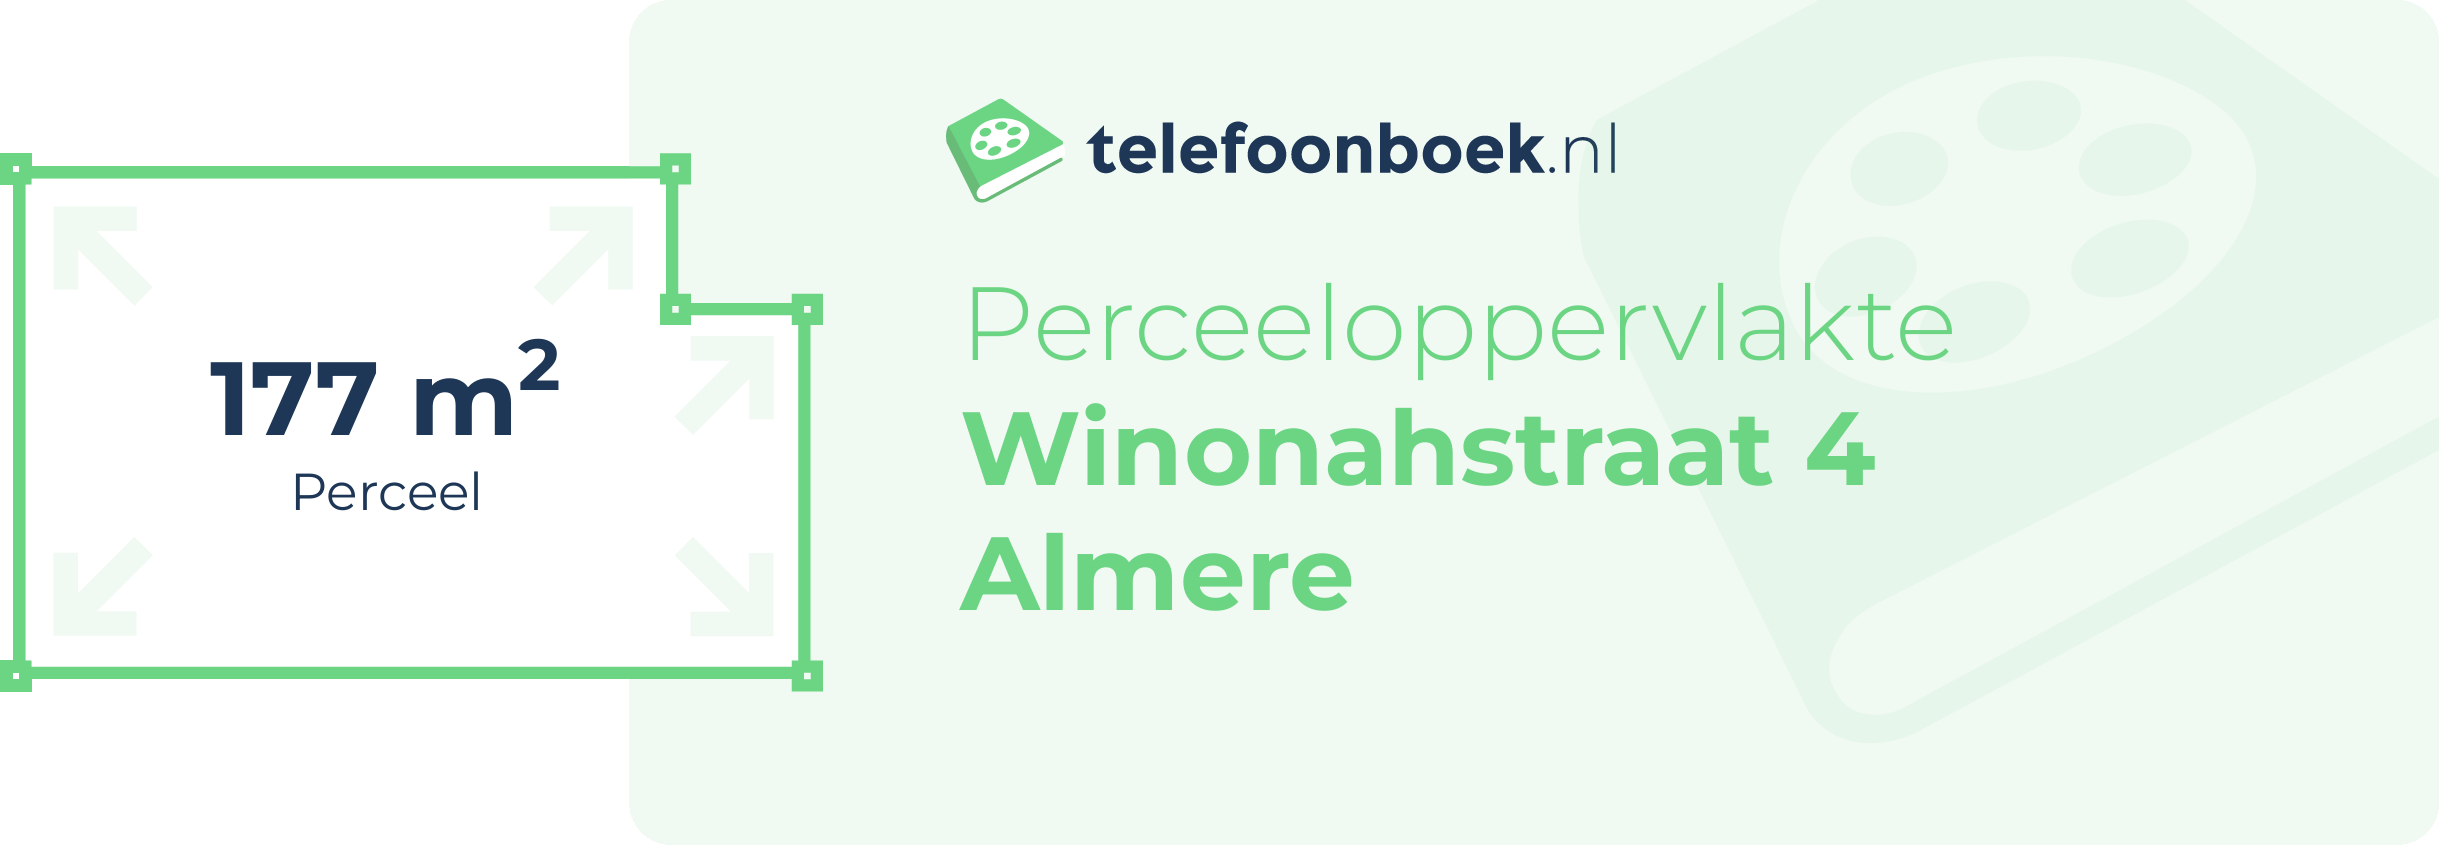 Perceeloppervlakte Winonahstraat 4 Almere